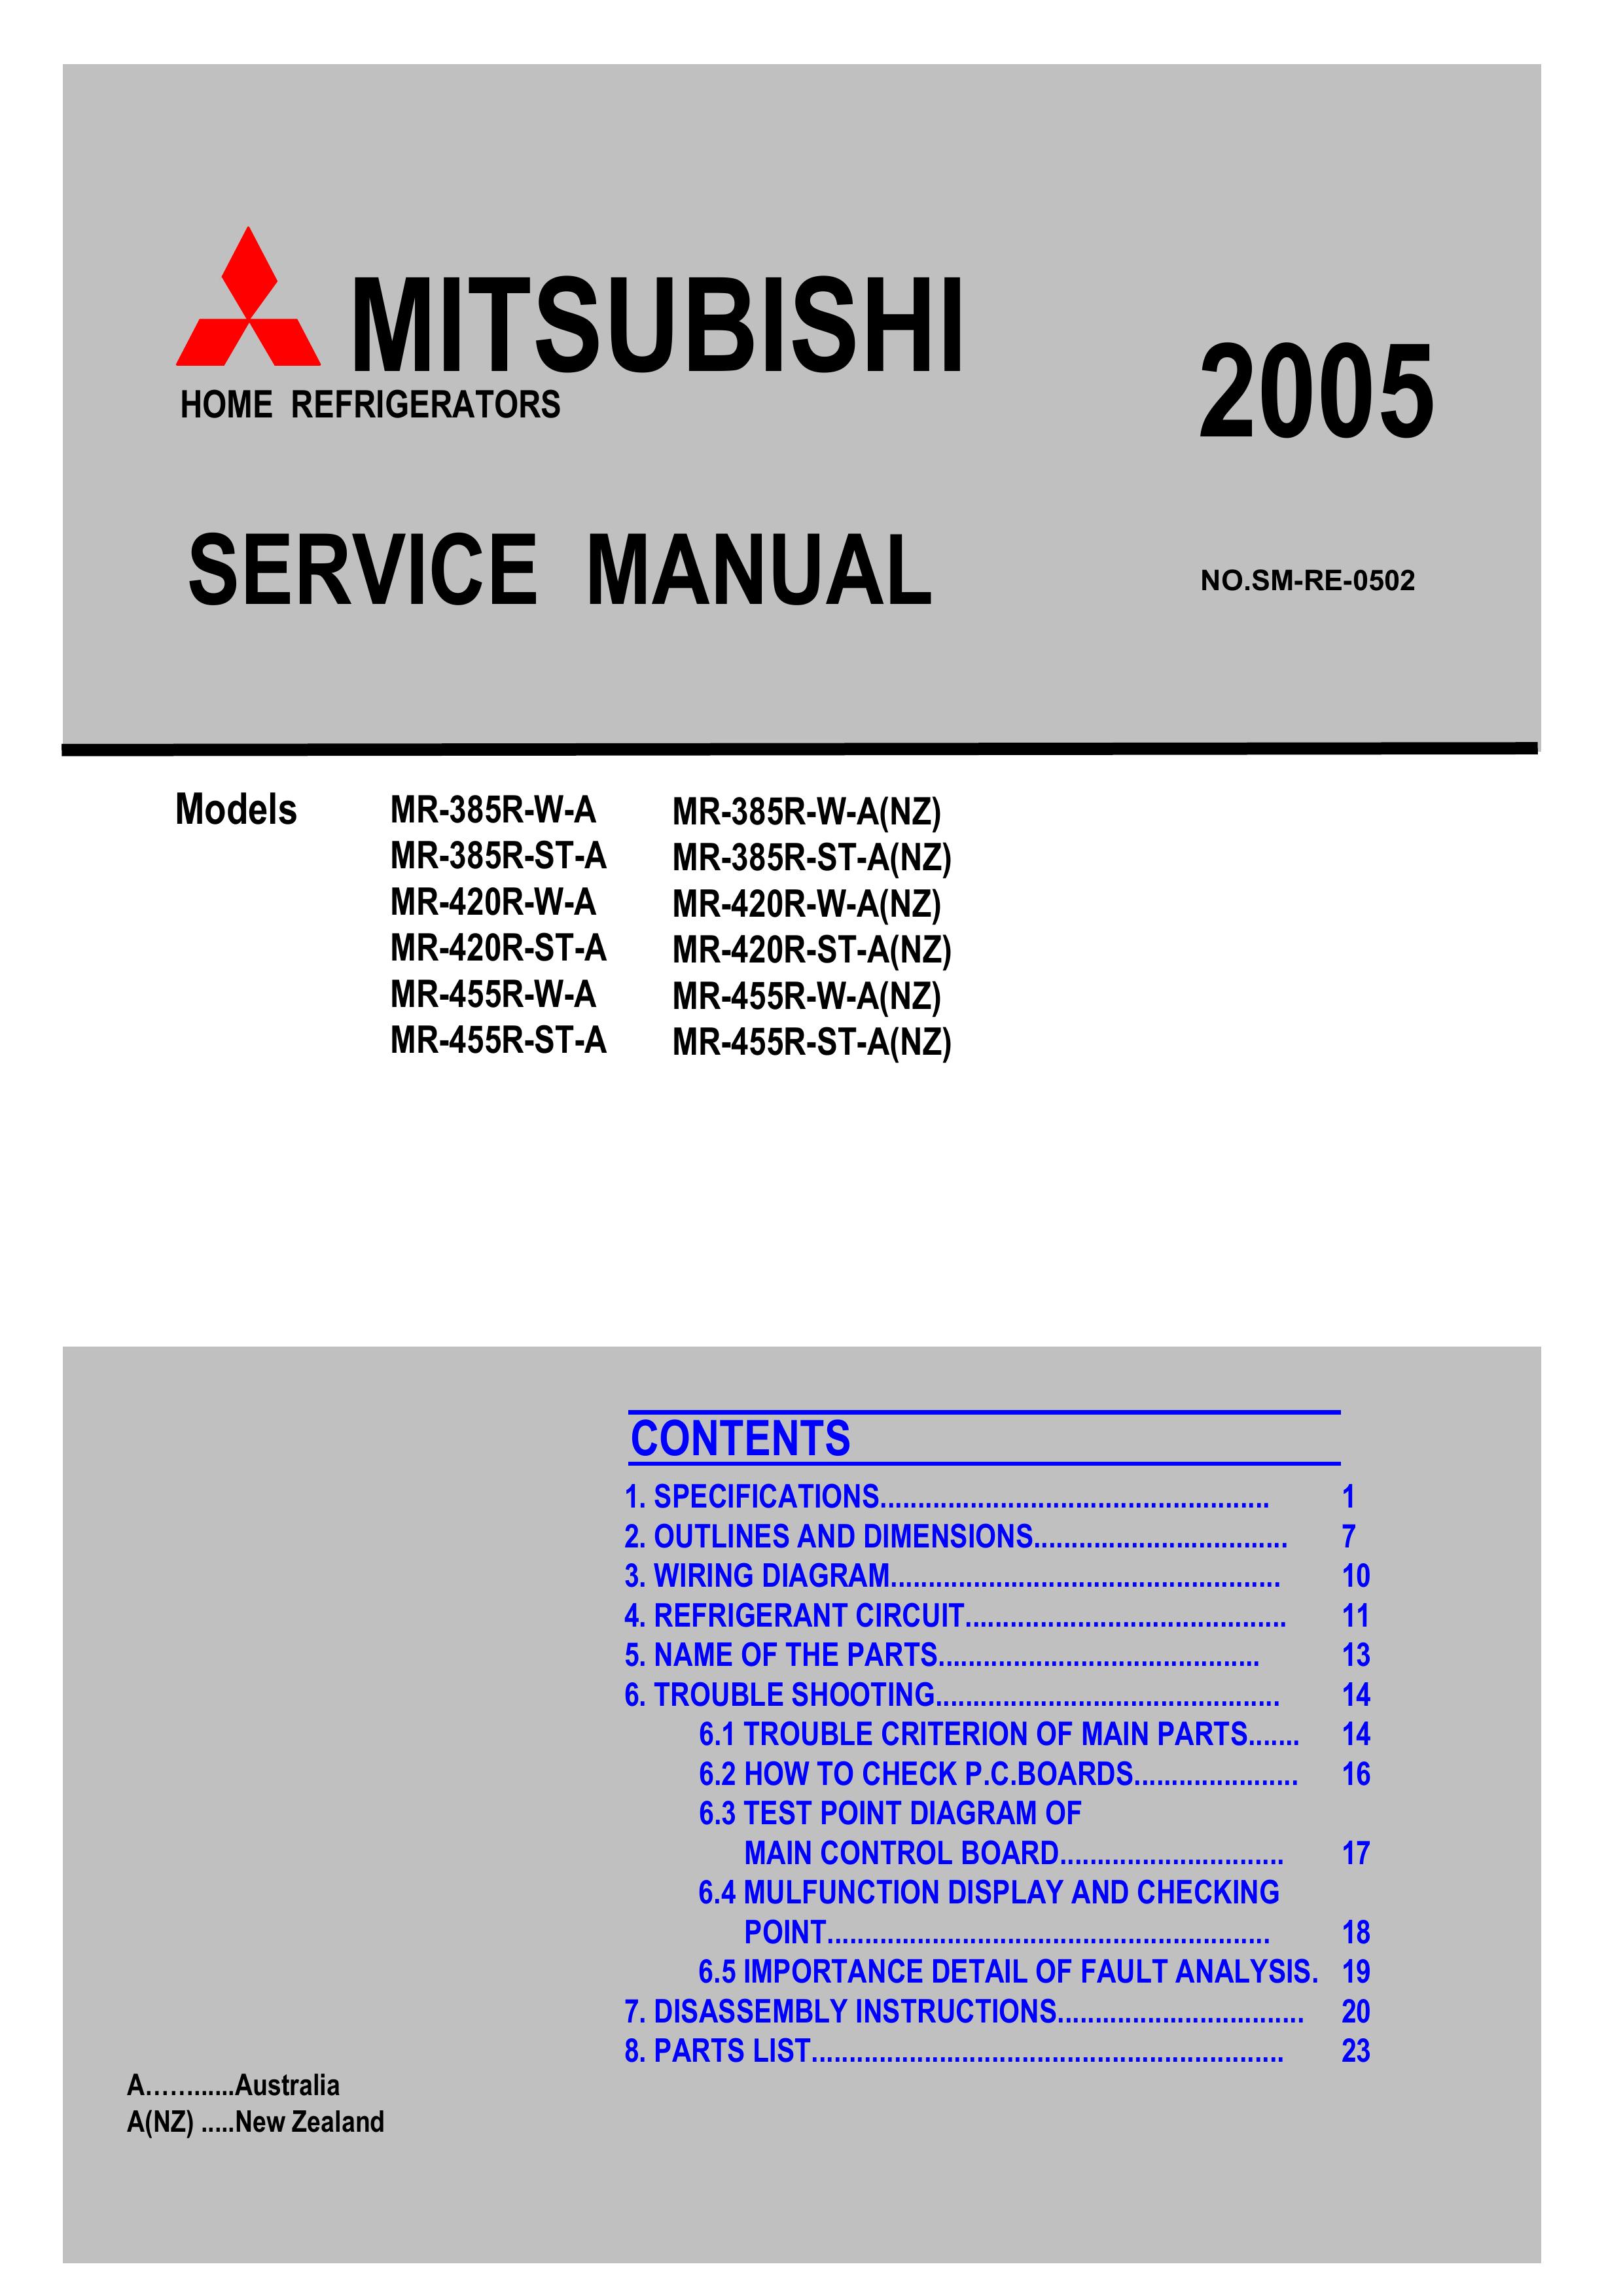 Mitsubishi Electronics MR-420R-W-A(NZ) Refrigerator User Manual